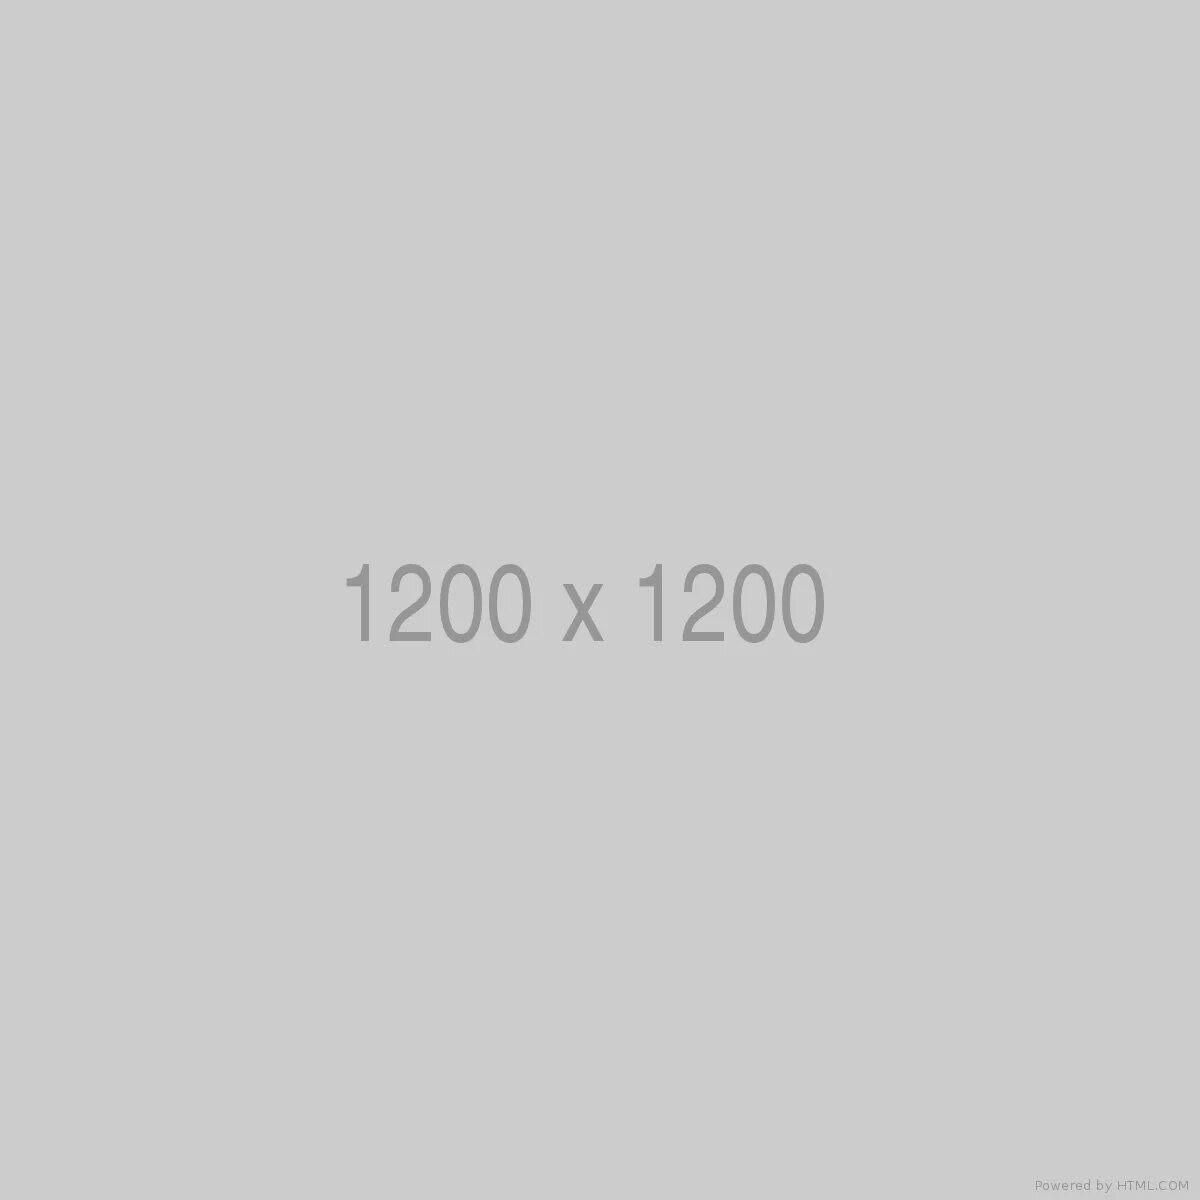 200 10 64. 200 На 200. 200 На 200 пикселей. Изображение 200x200. 200x200 картинки.